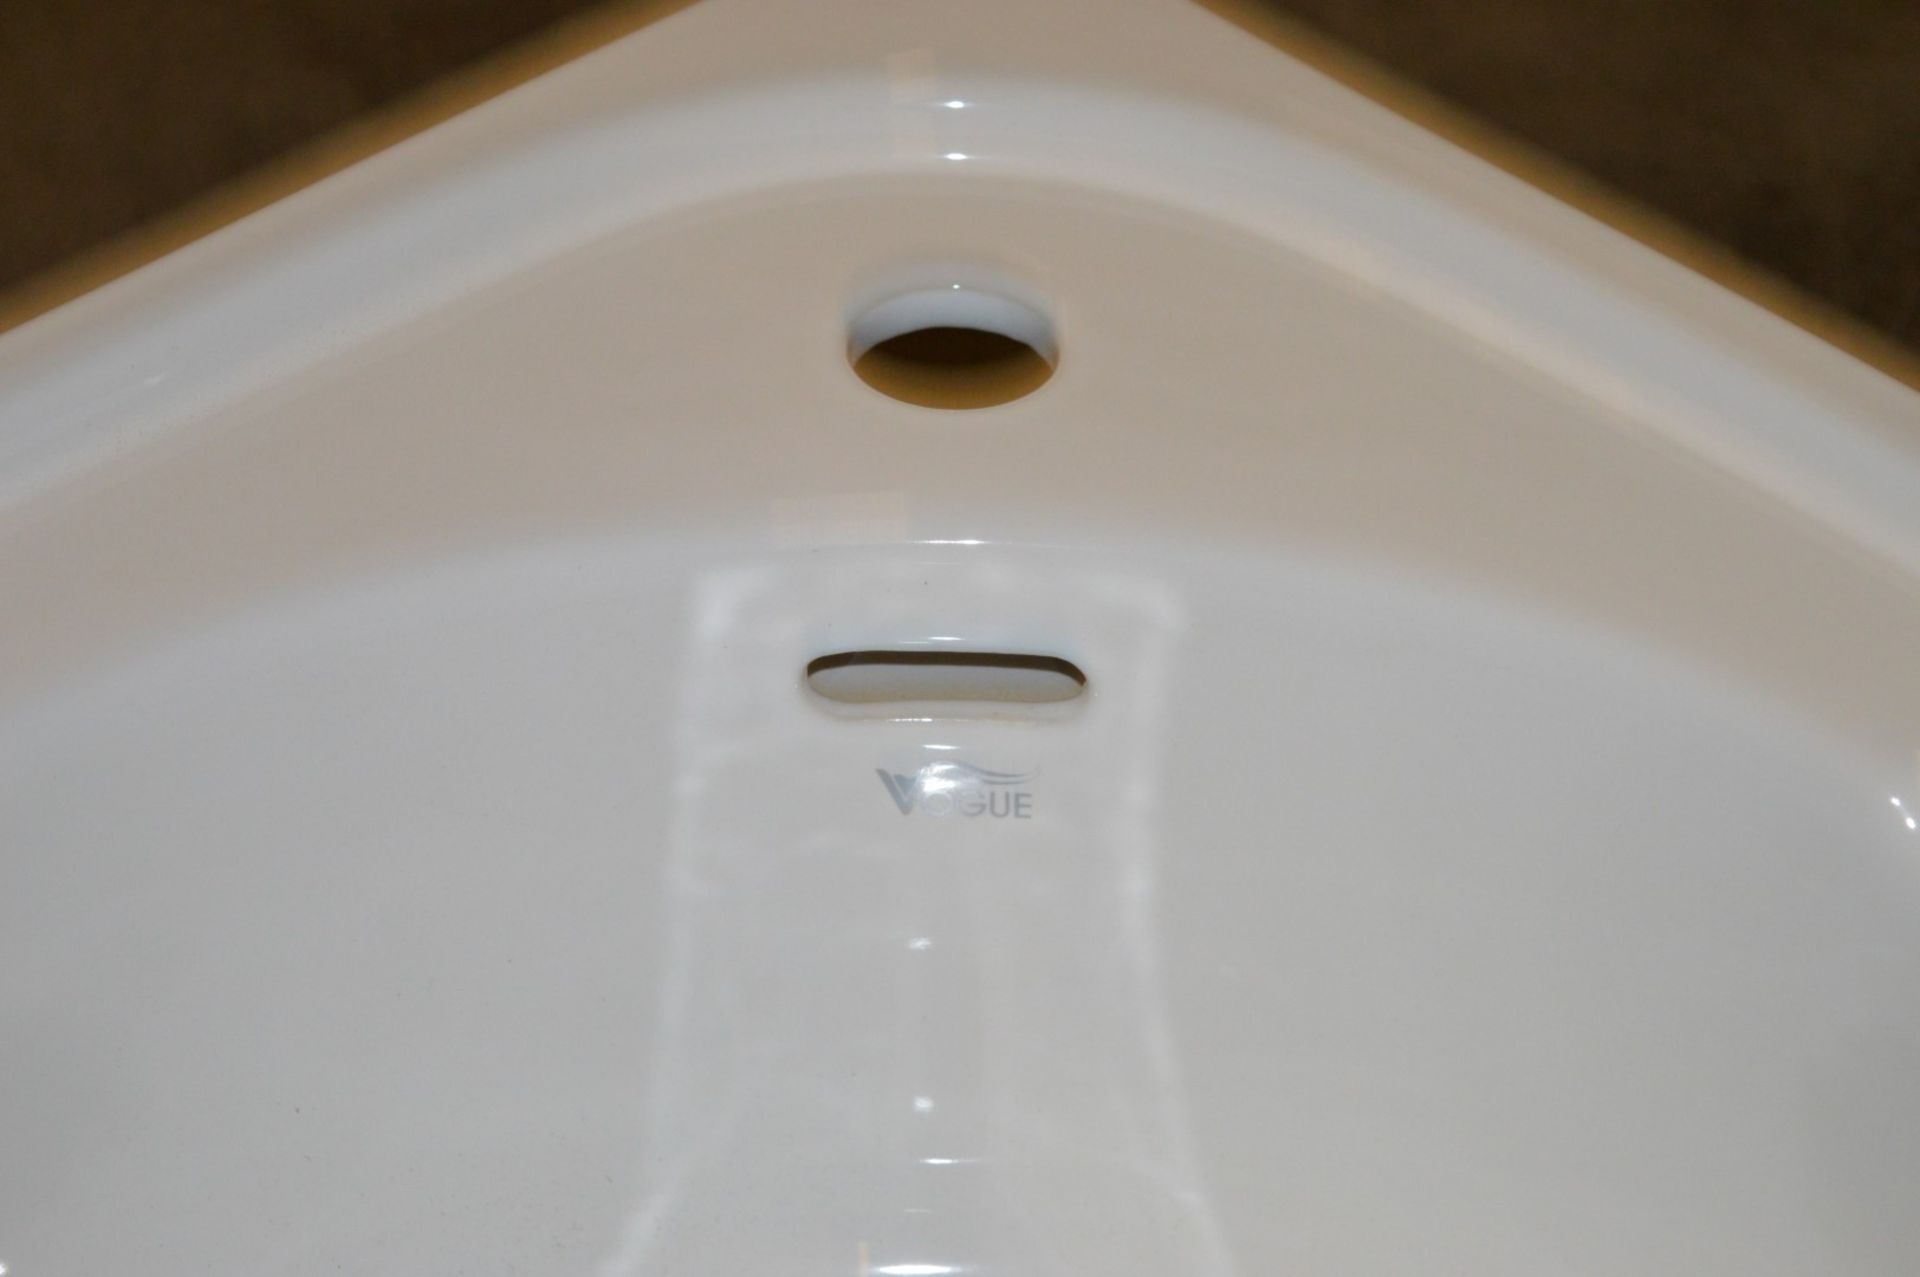 1 x Vogue Bathrooms KARIDI Single Tap Hole CORNER SINK BASIN - Brand New and Boxed - Sleek Modern - Image 4 of 4